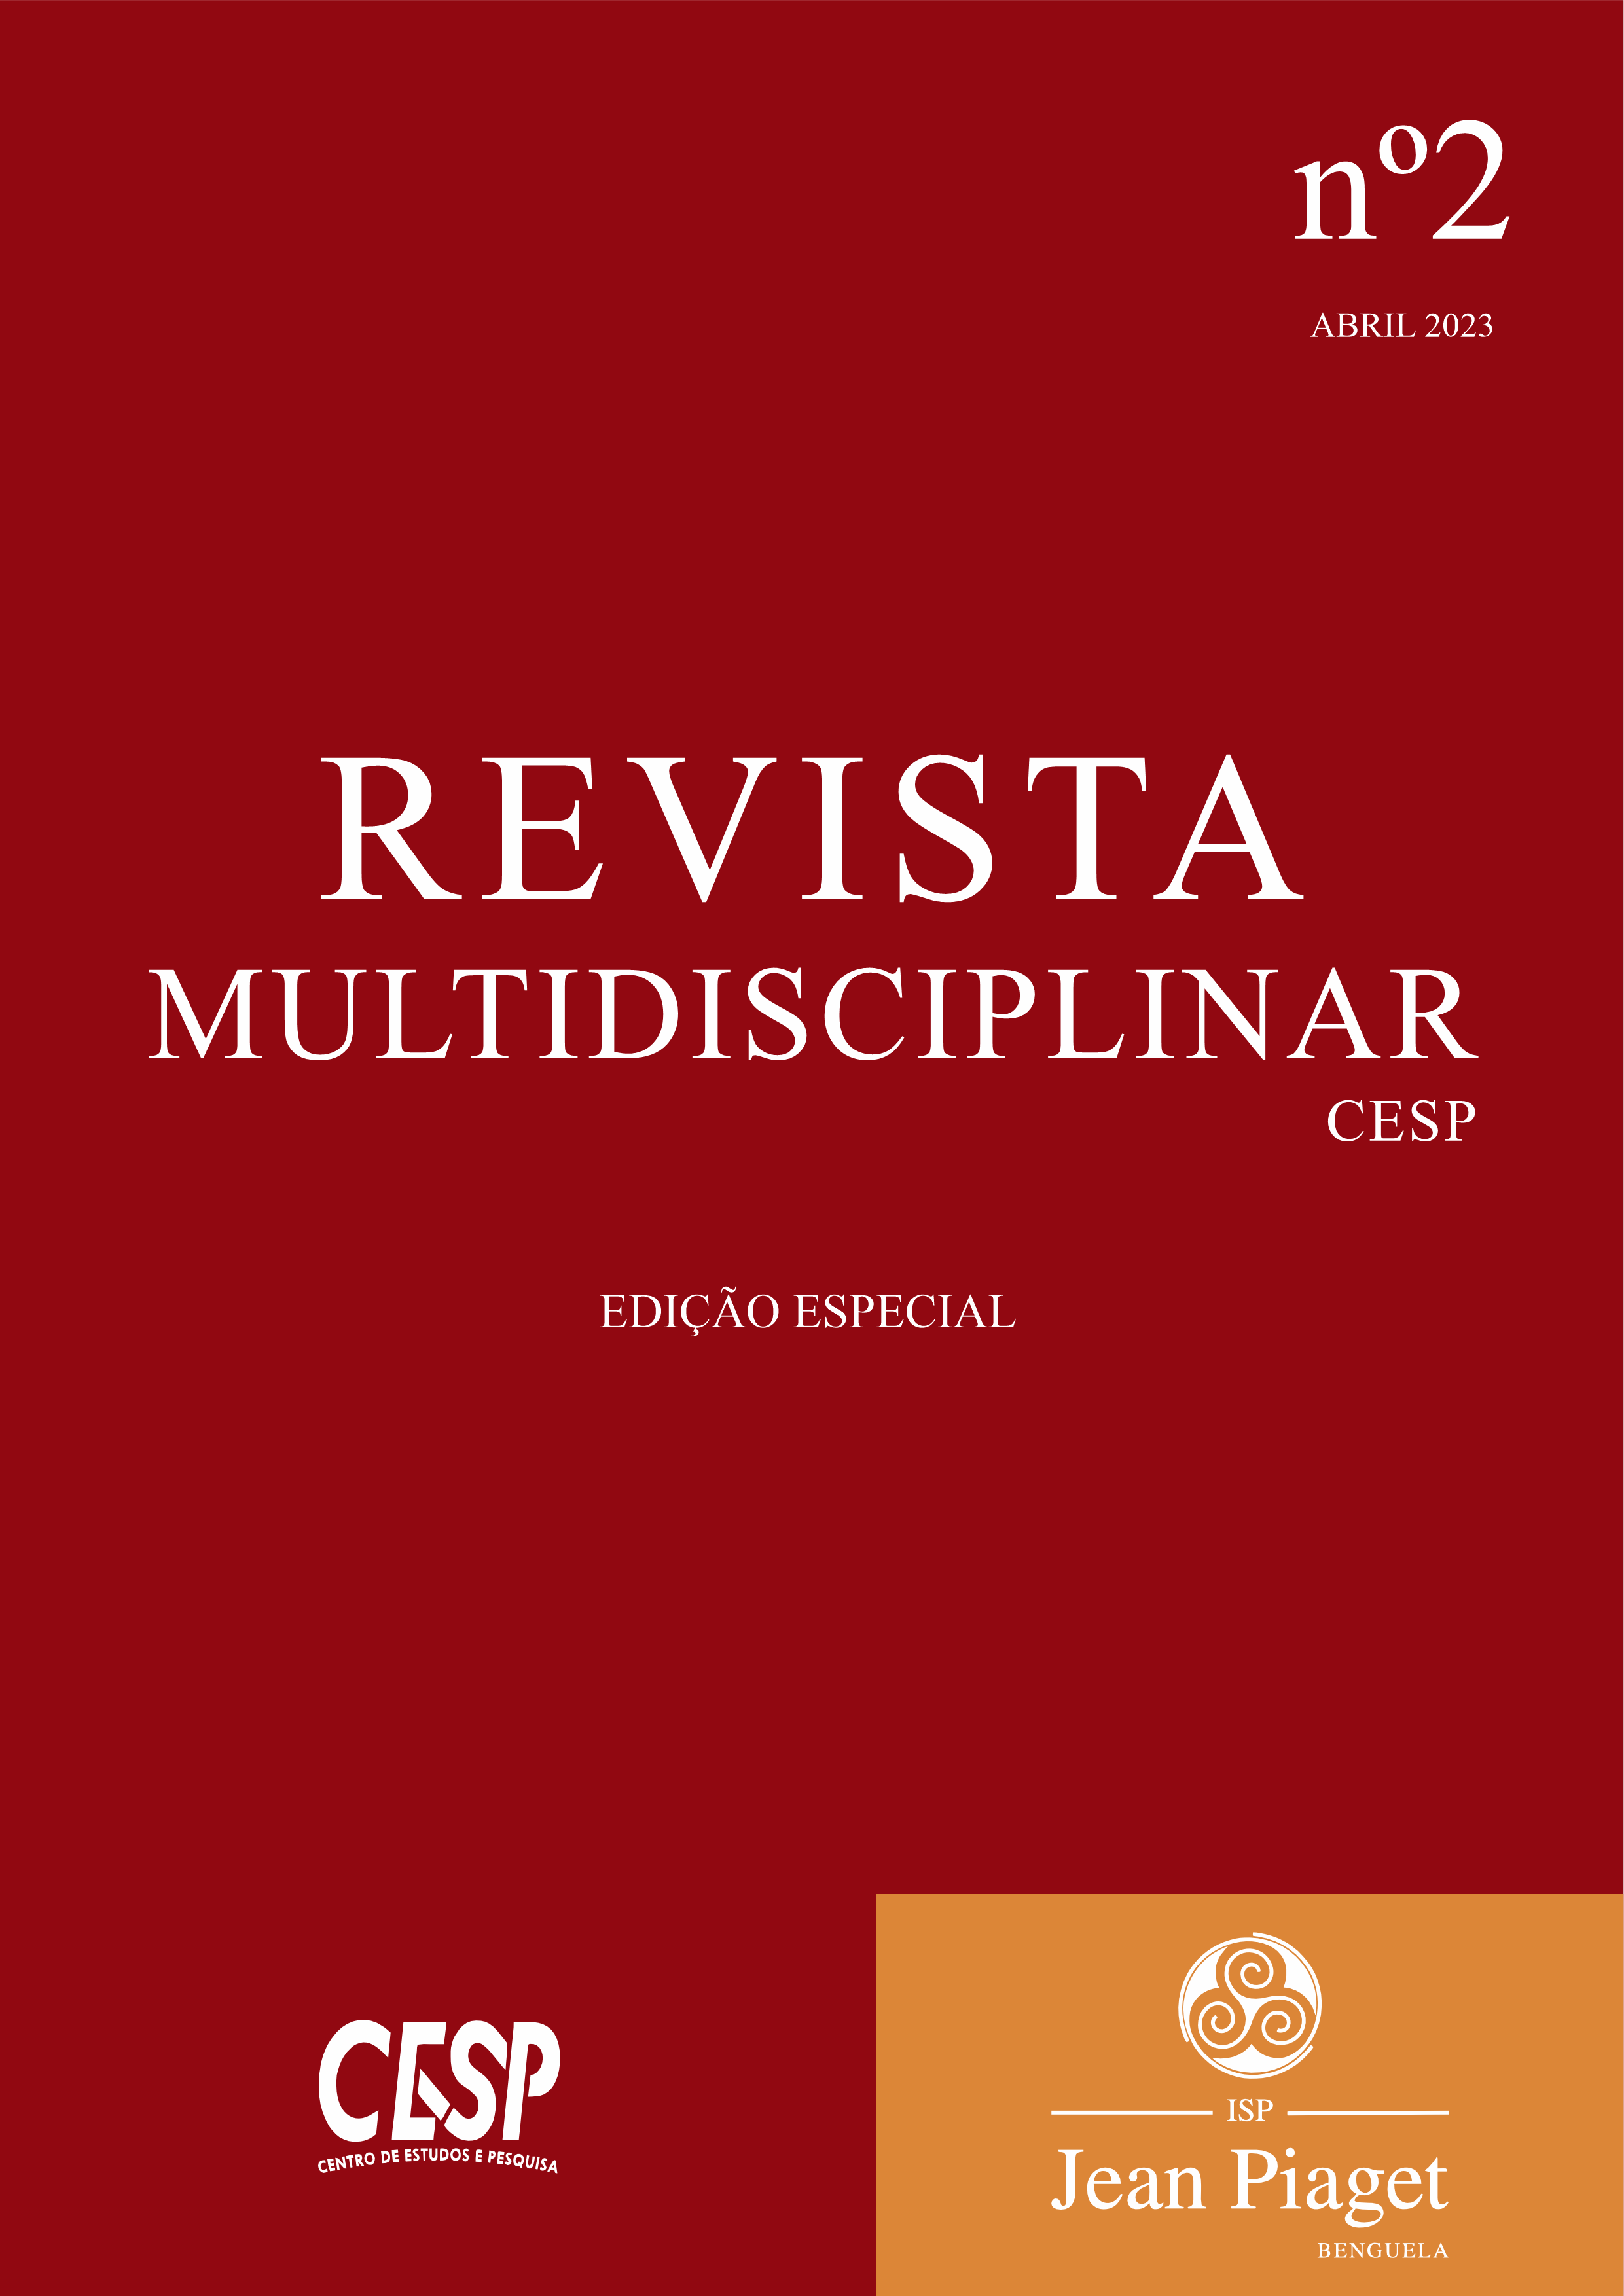 revista multidisciplinar CESP nº 2 | Abril 2023